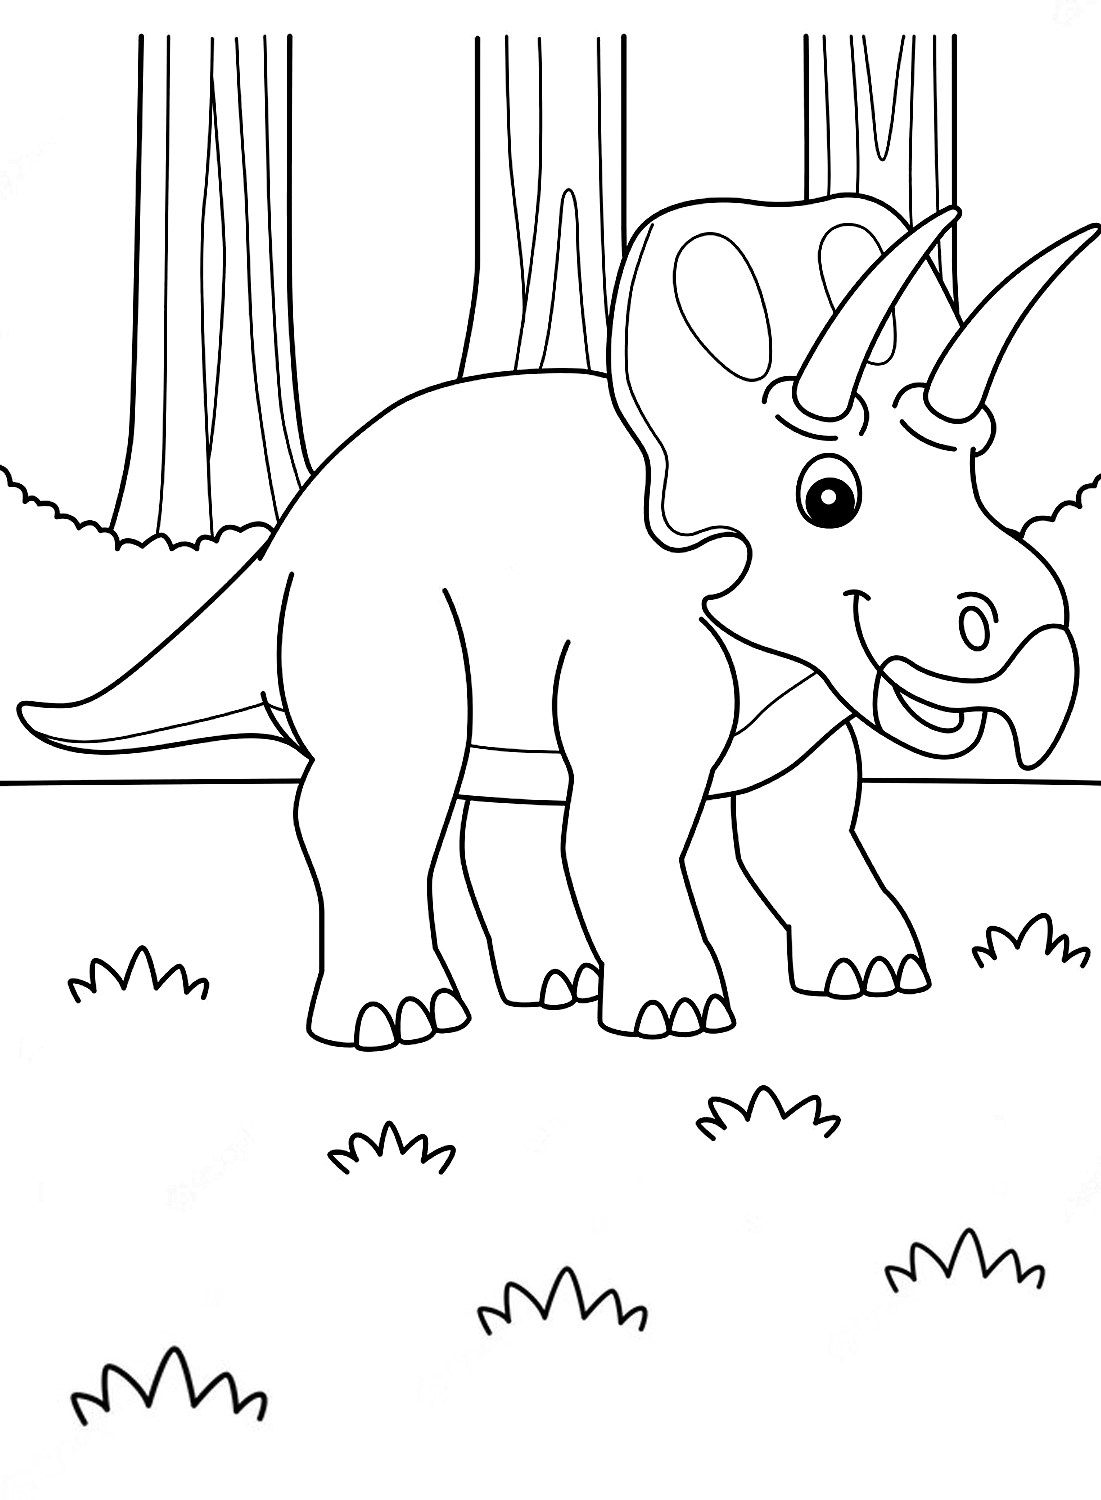 Coloriage Tricératops